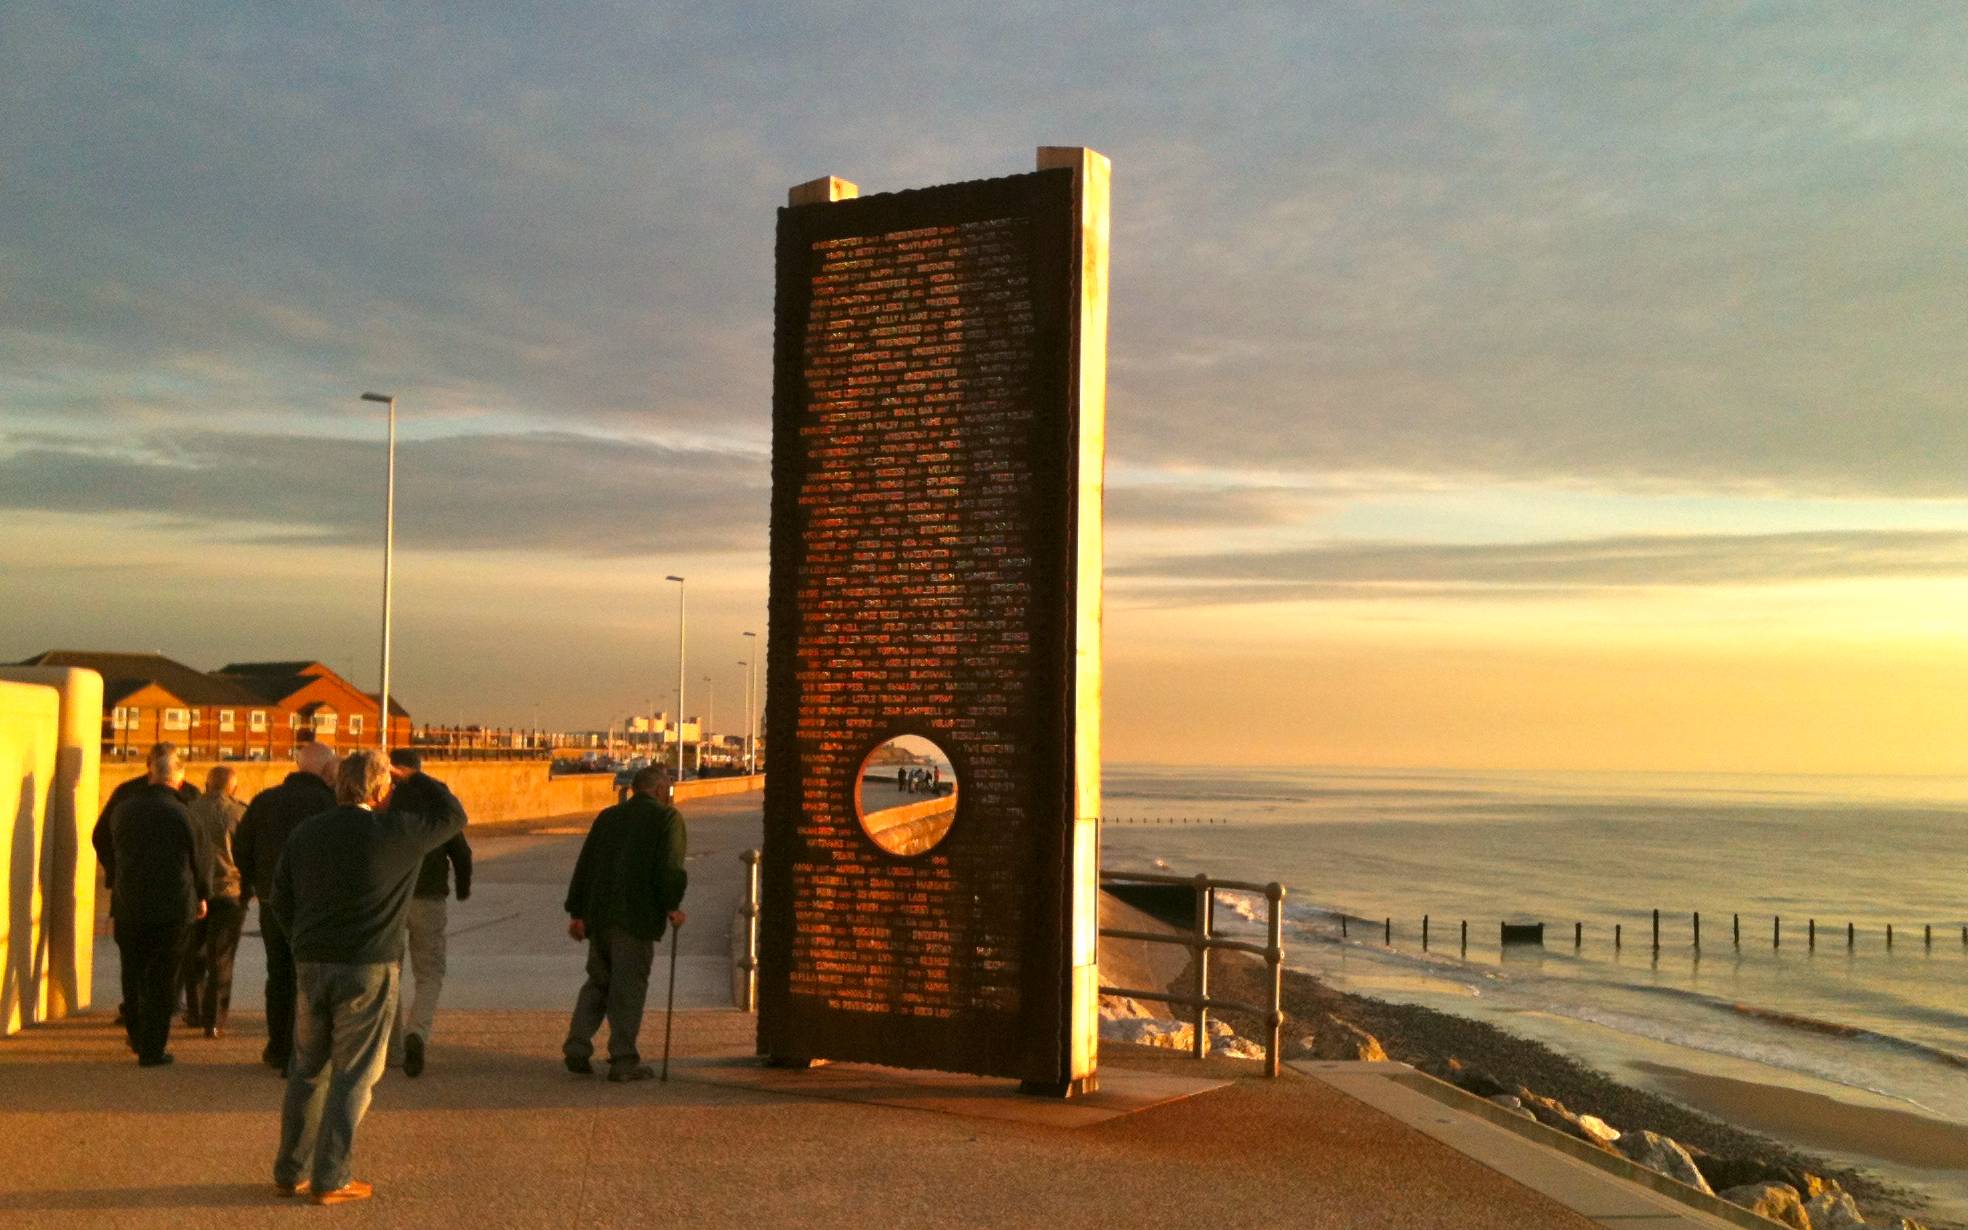 Public Art: Shipwreck Memorial on the Promenade - Visit Cleveleys